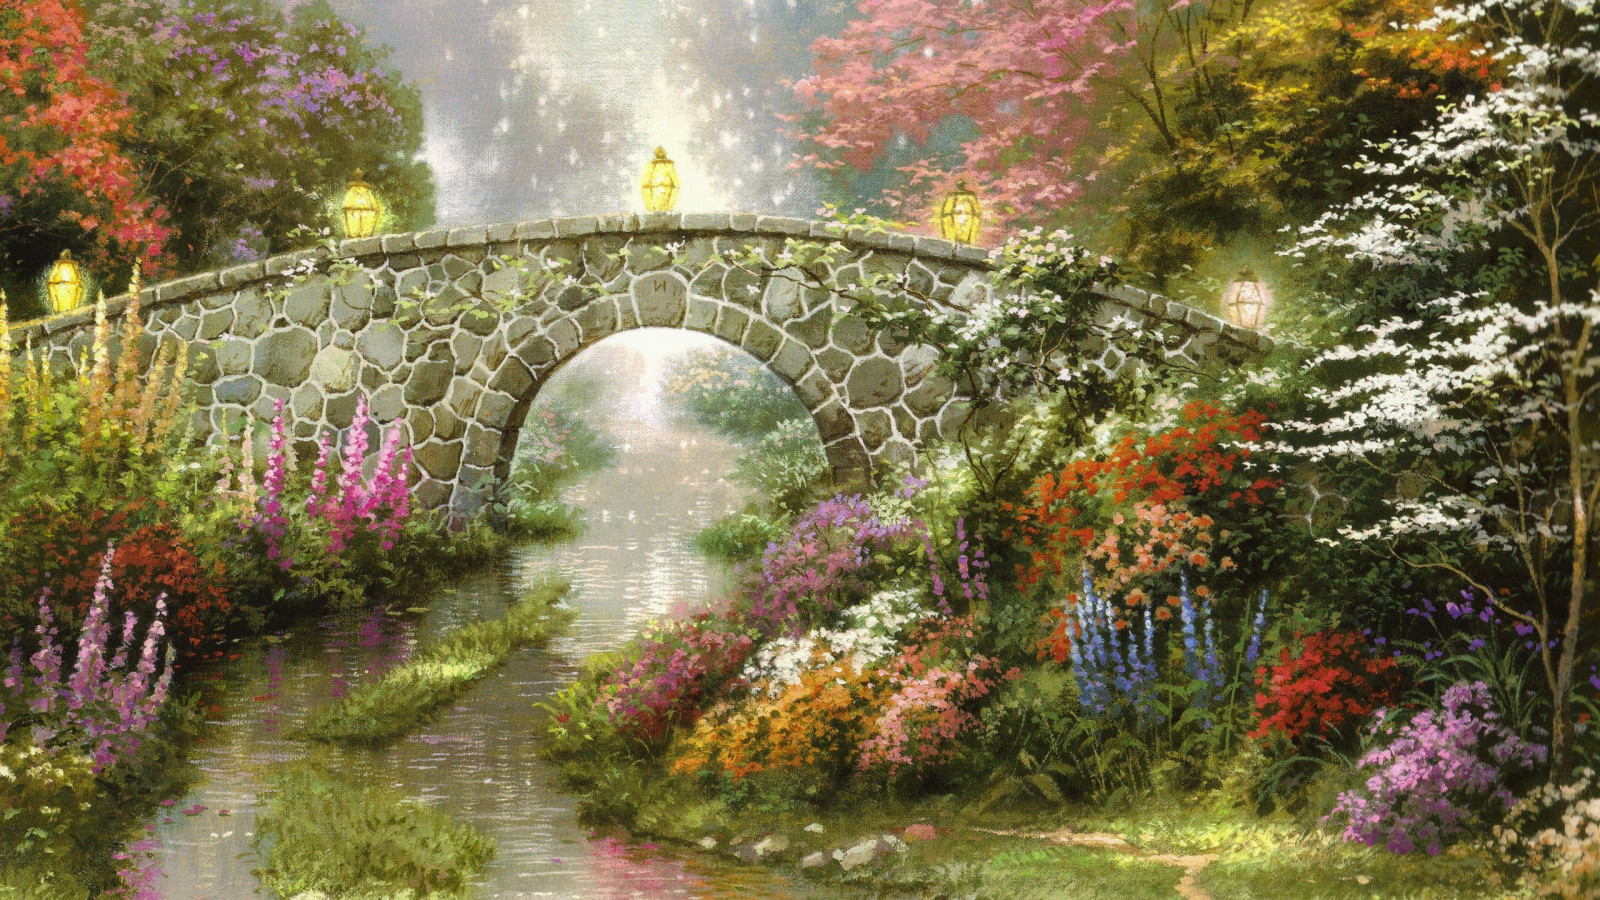 Wallpaper : painting, flowers, lantern, bridge, arch, stream, Thomas Kinkade, autumn, flower, flora, lawn, 2560x1440 px, botany, floristry, botanical garden 2560x1440